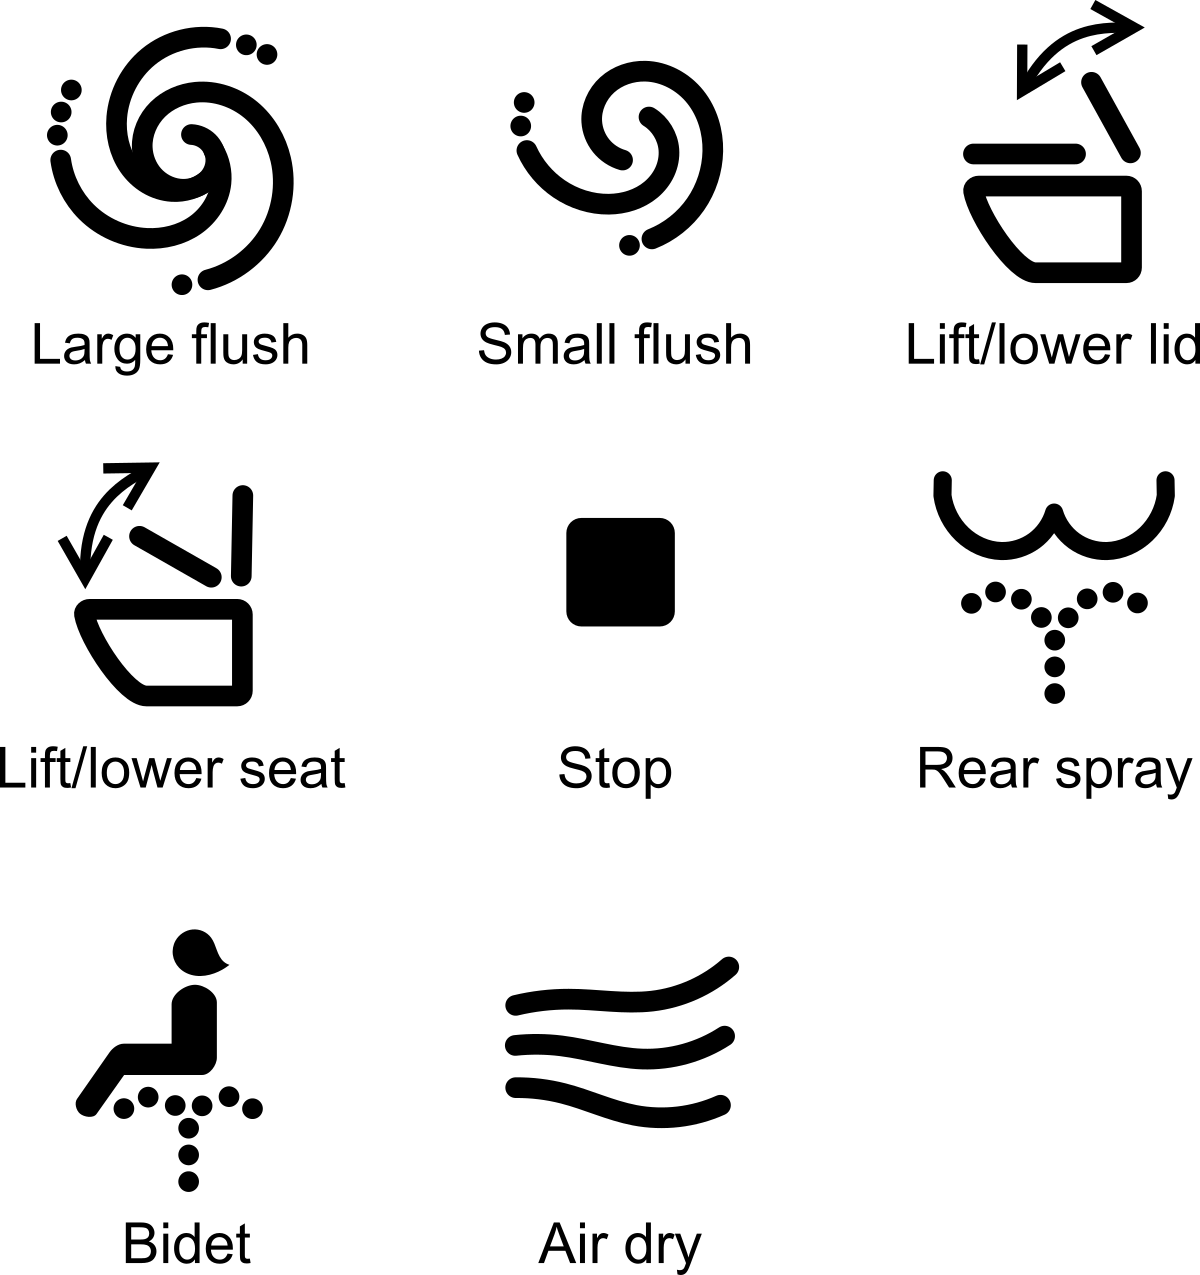 standard Japanese spray toilets pictograms